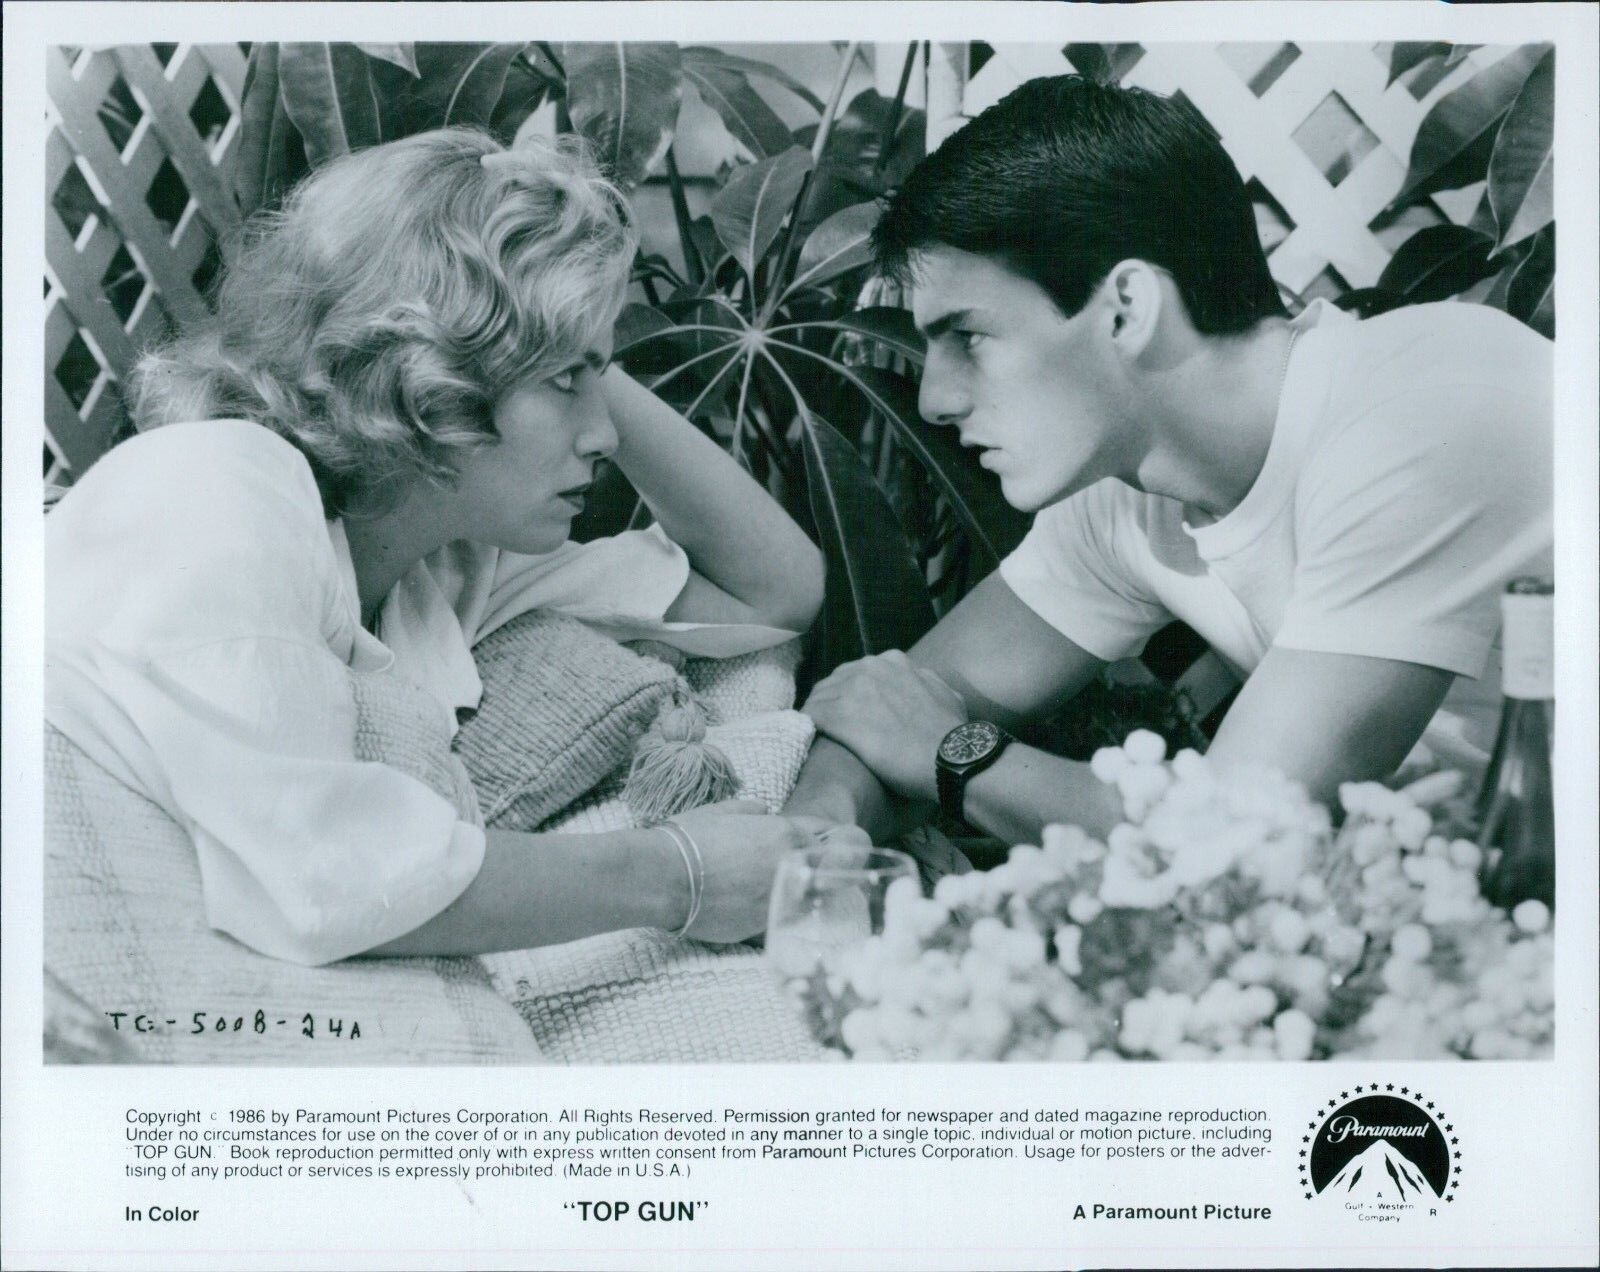 Top Gun Tom Cruise Kelly McGillis Unsigned Original Still Promo 8x10 Photo A